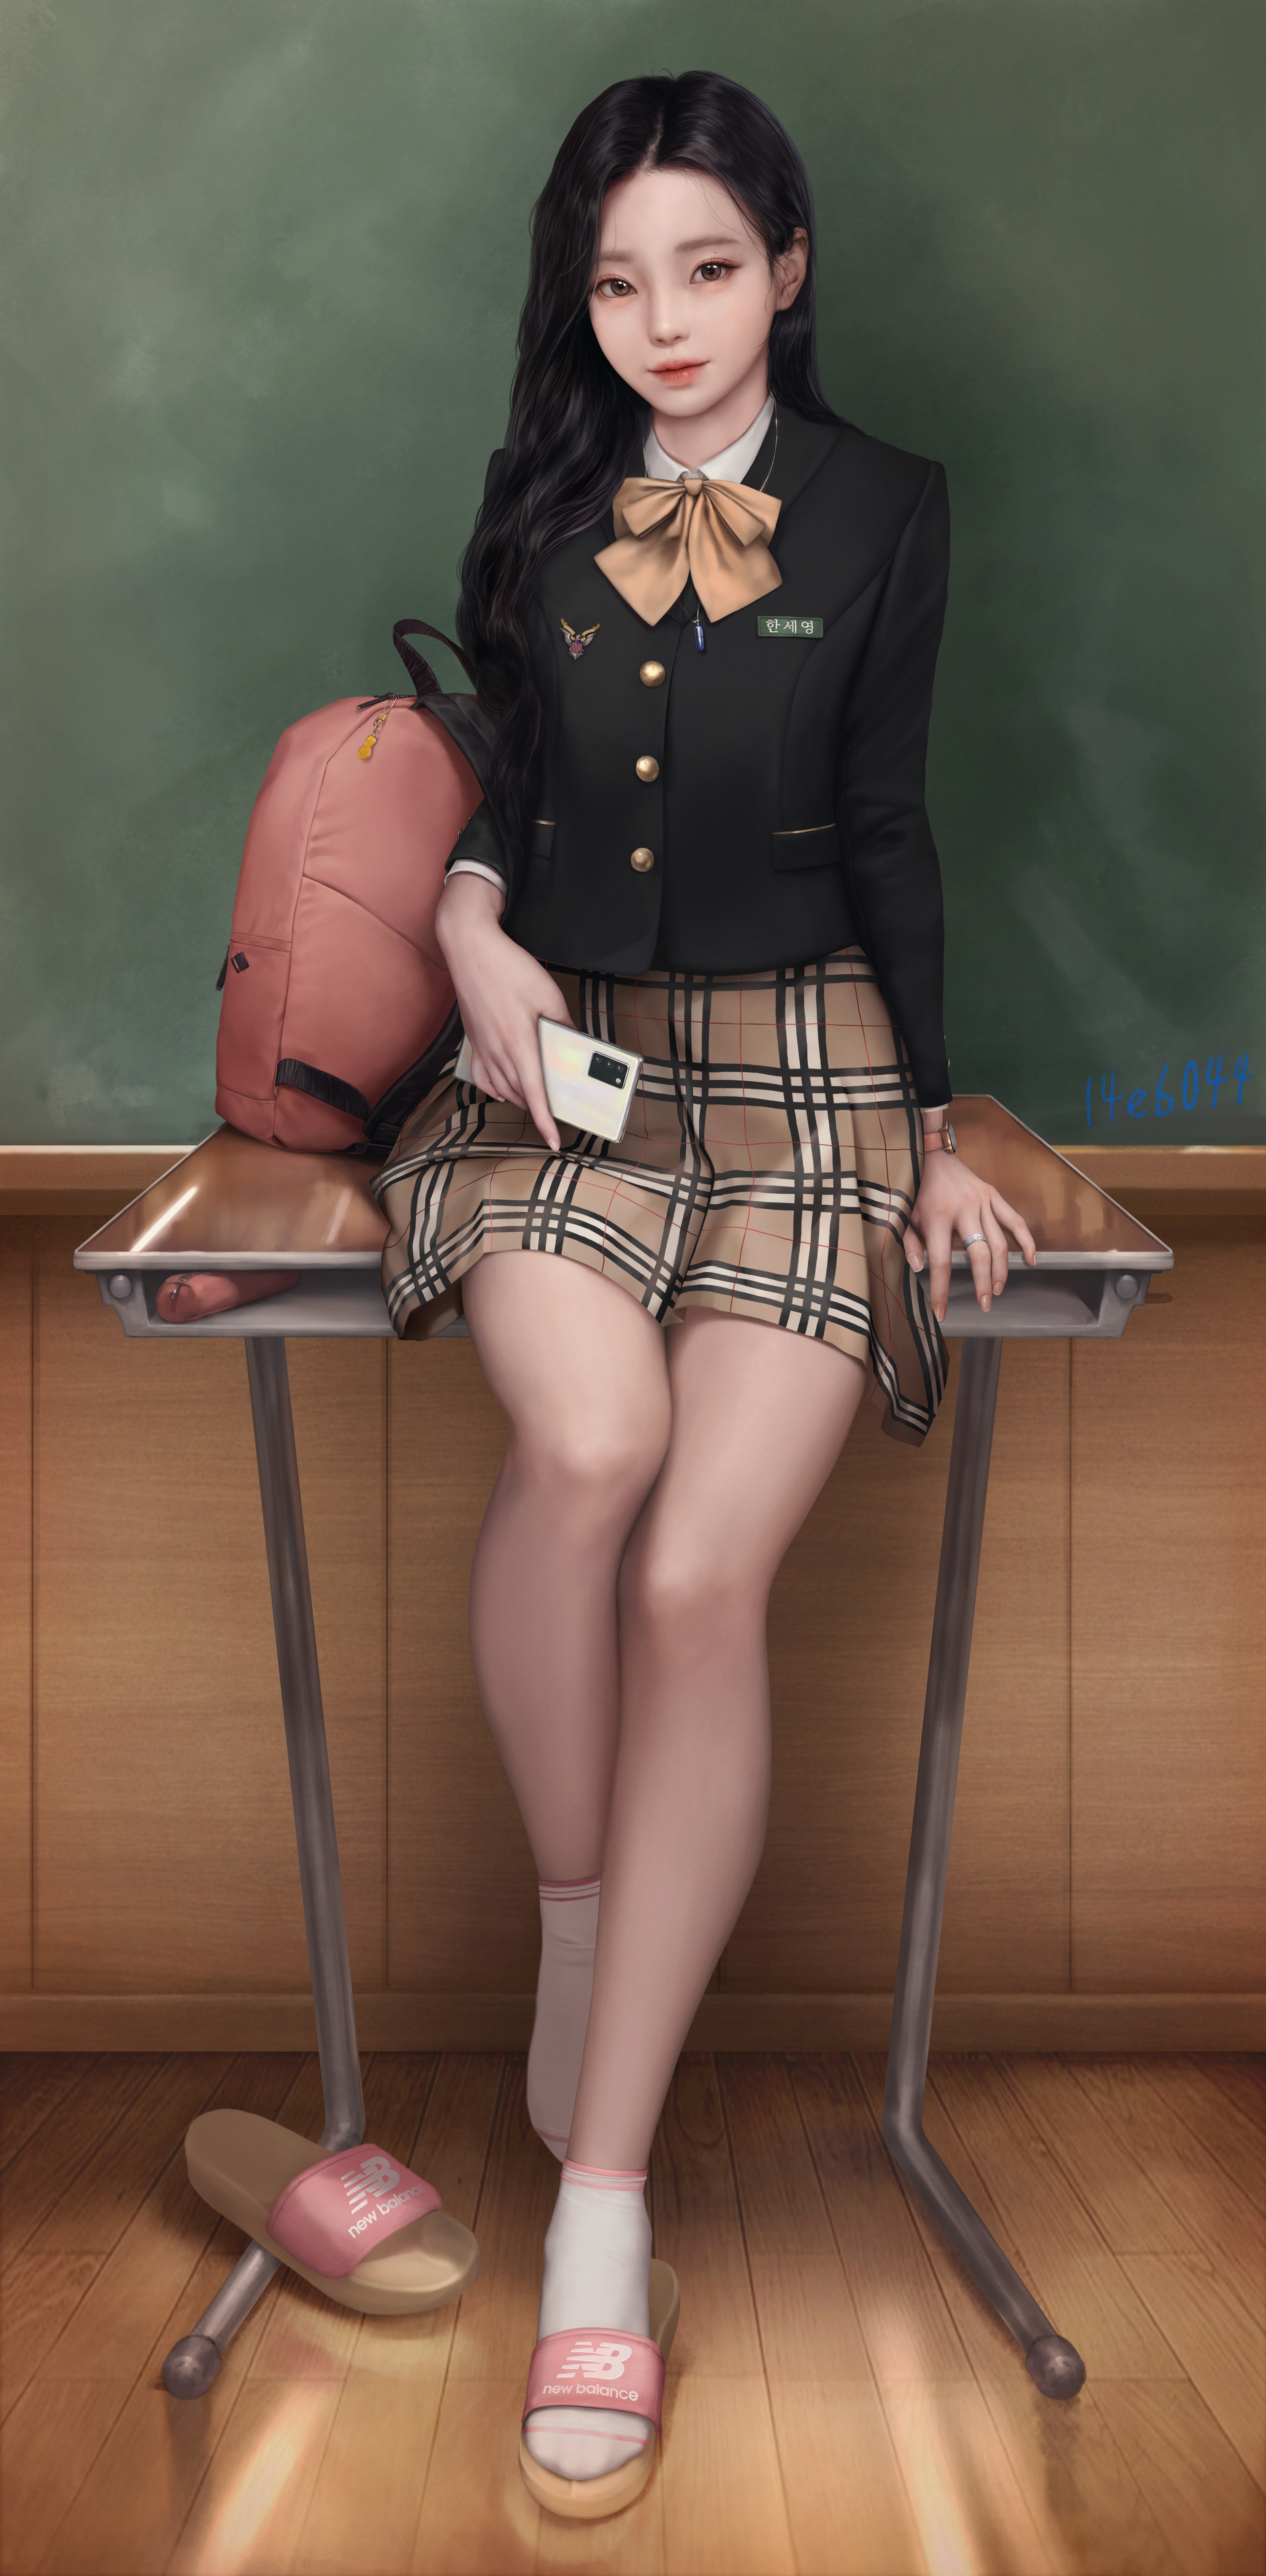 Asian Schoolgirl School Uniform Blackboard Artwork Drawing Desk Cellphone Yong Jun Park Women Portra 3000x6105